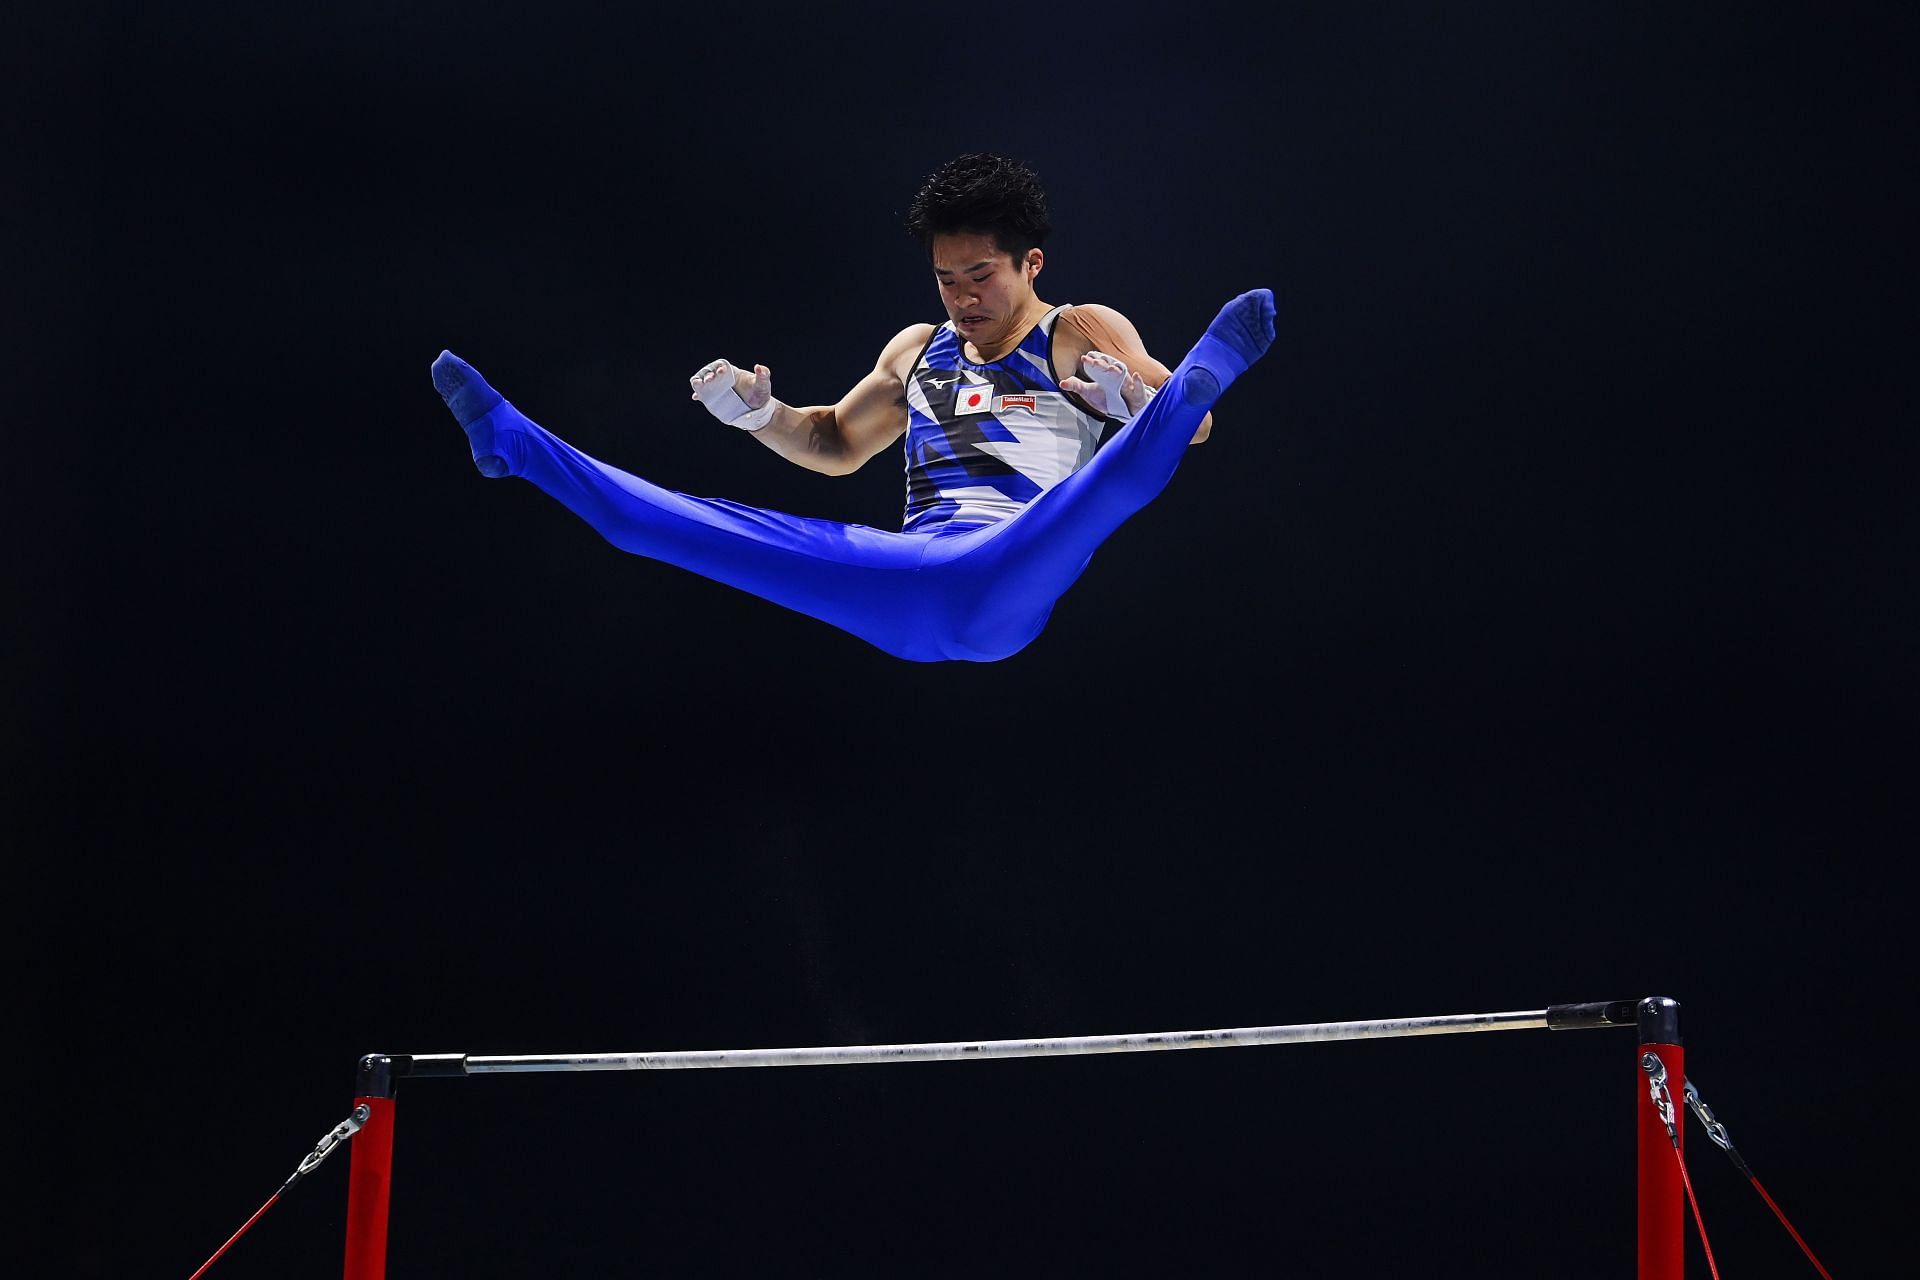 Kamoto flying high at the 2022 Gymnastics World Championships, 2022 